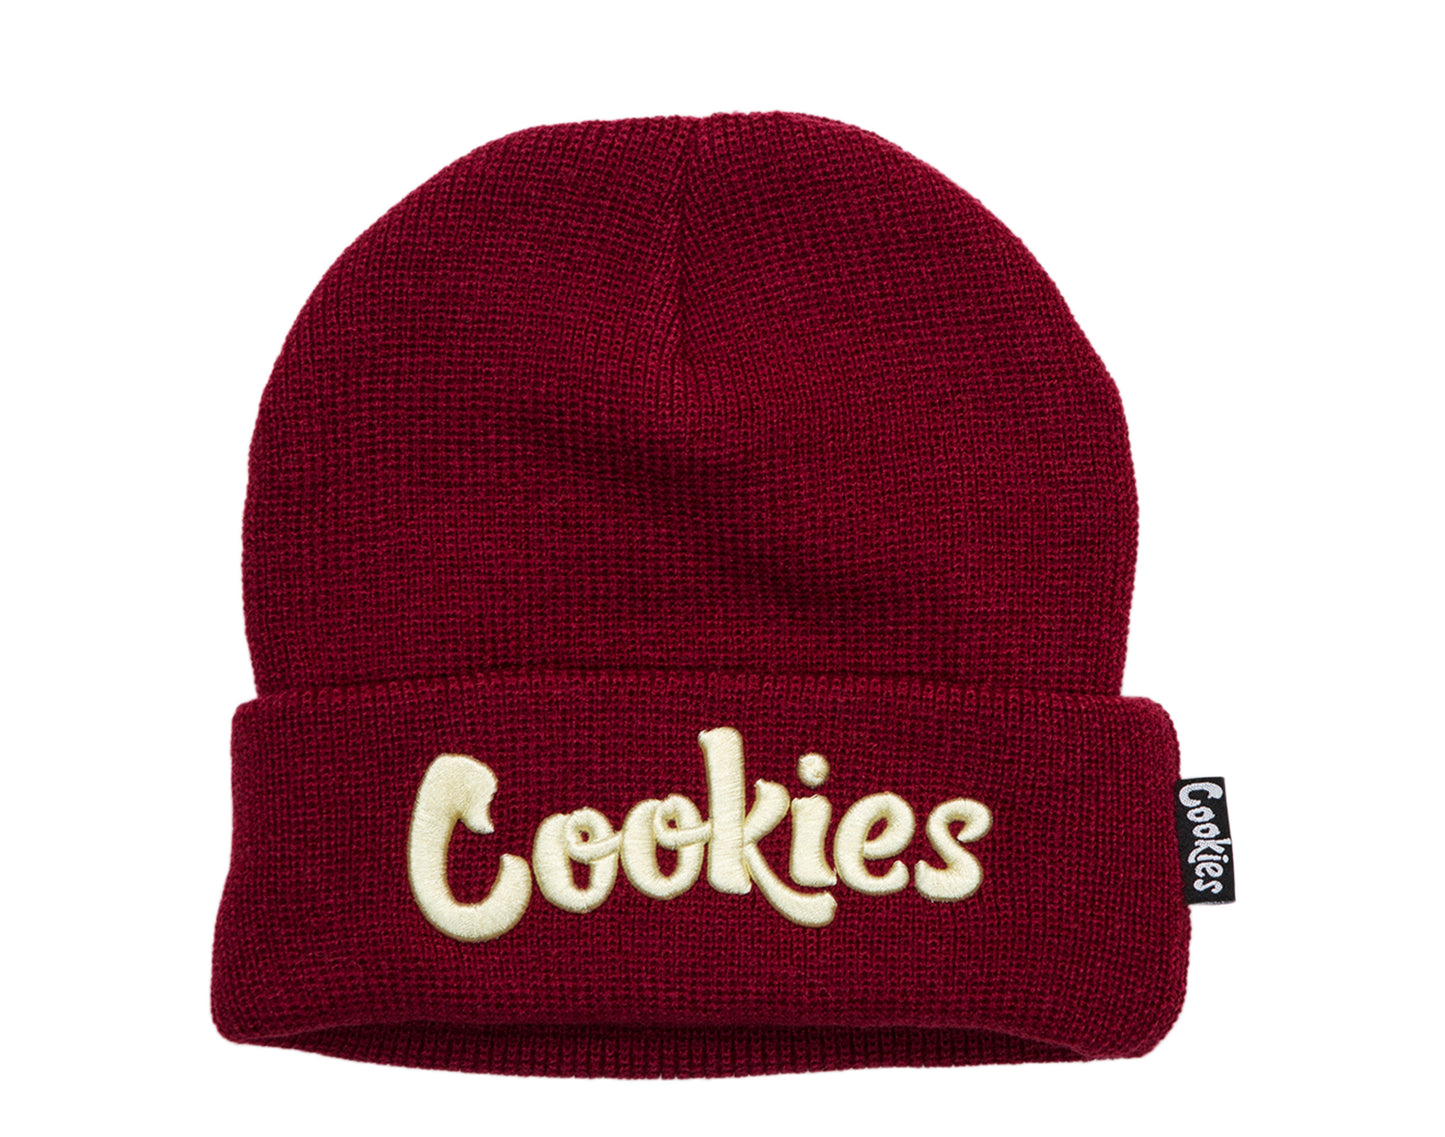 Cookies Original Logo Thin Mint Burgundy/Cream Knit Beanie Hat 1546X4388-BRC